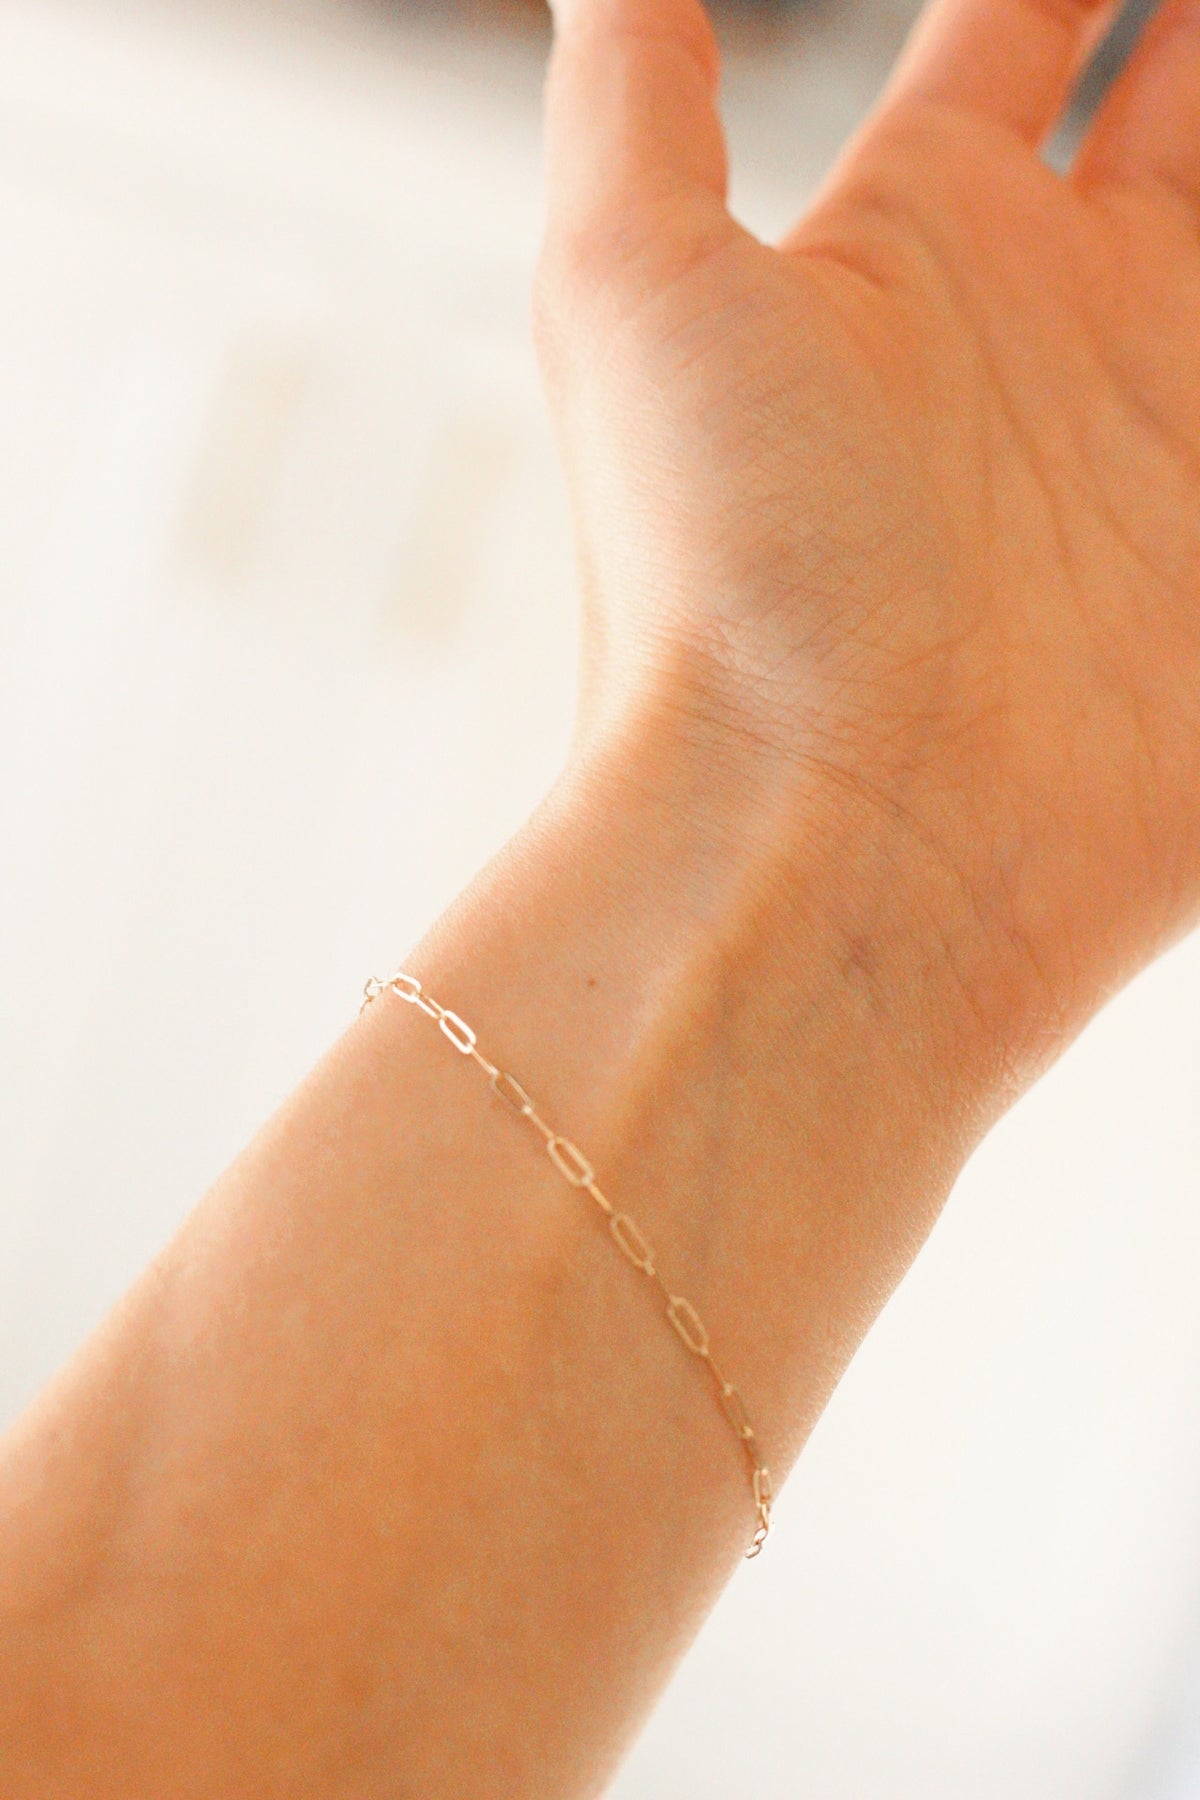 Permanent Jewelry New York SoHo-NY Manhattan - Permanent Forever Bracelet  Anklet Necklace